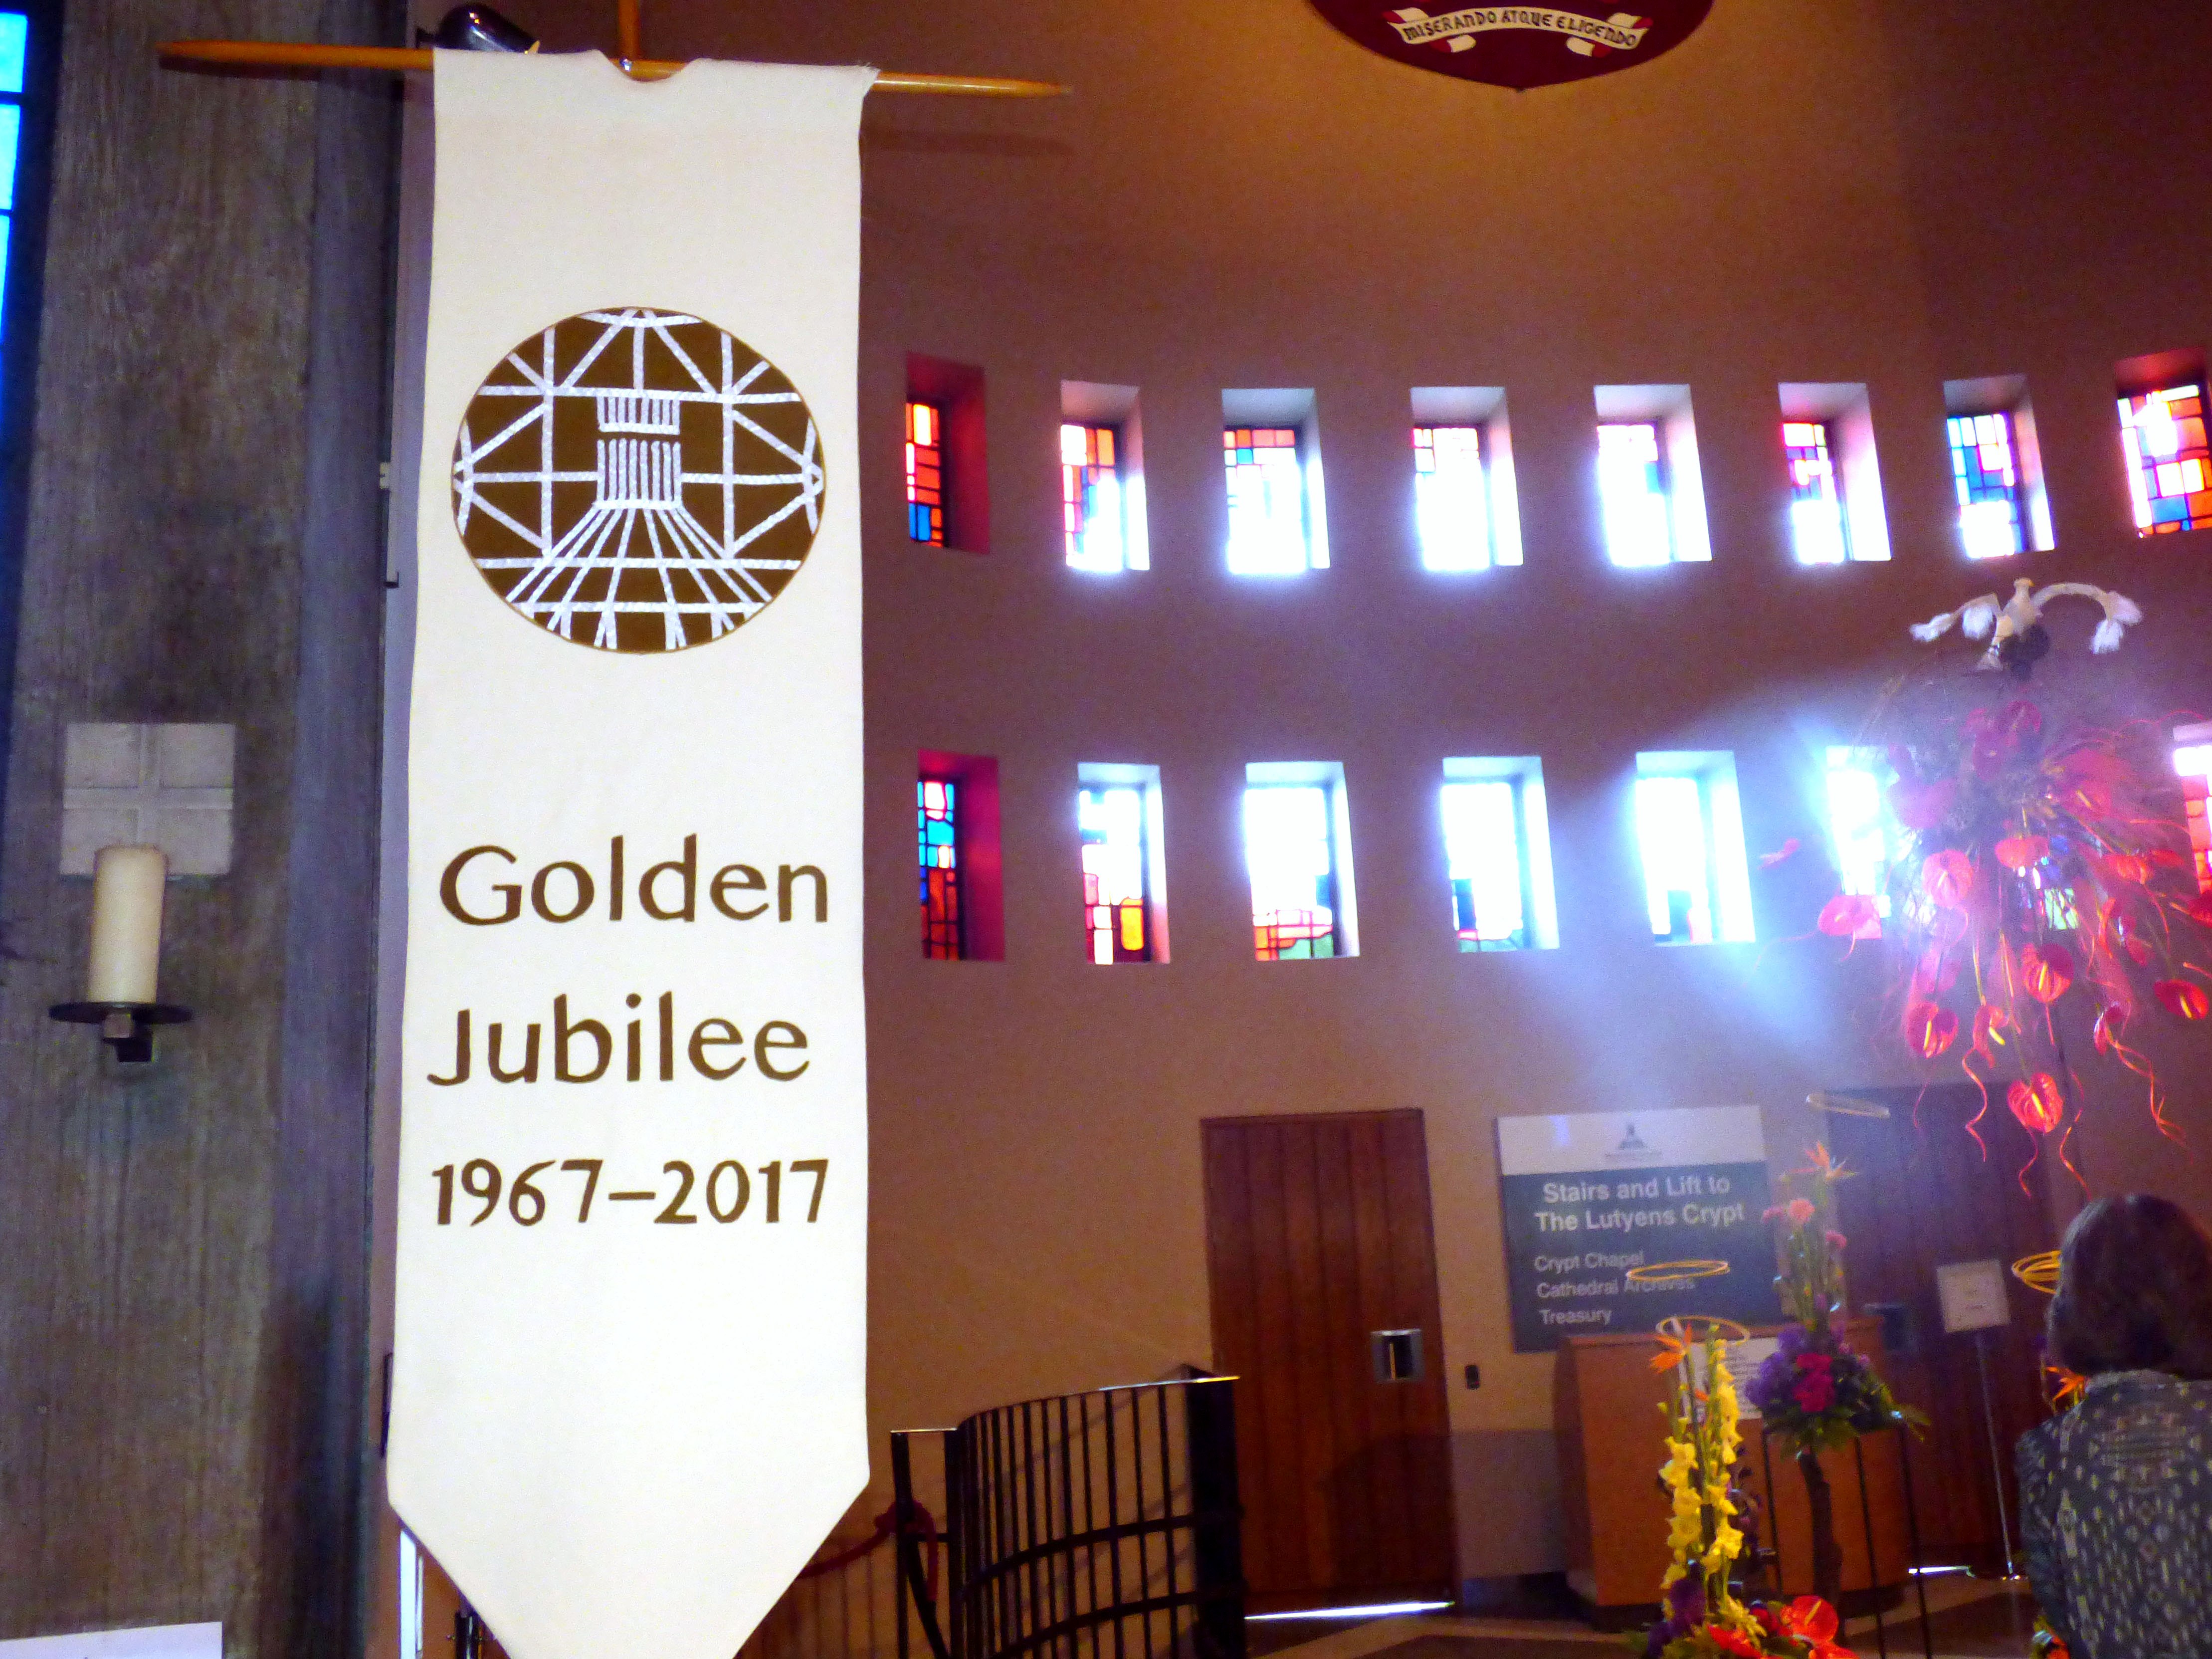 Golden Jubilee Flower Festival, Liverpool Metropolitan Cathedral 2017